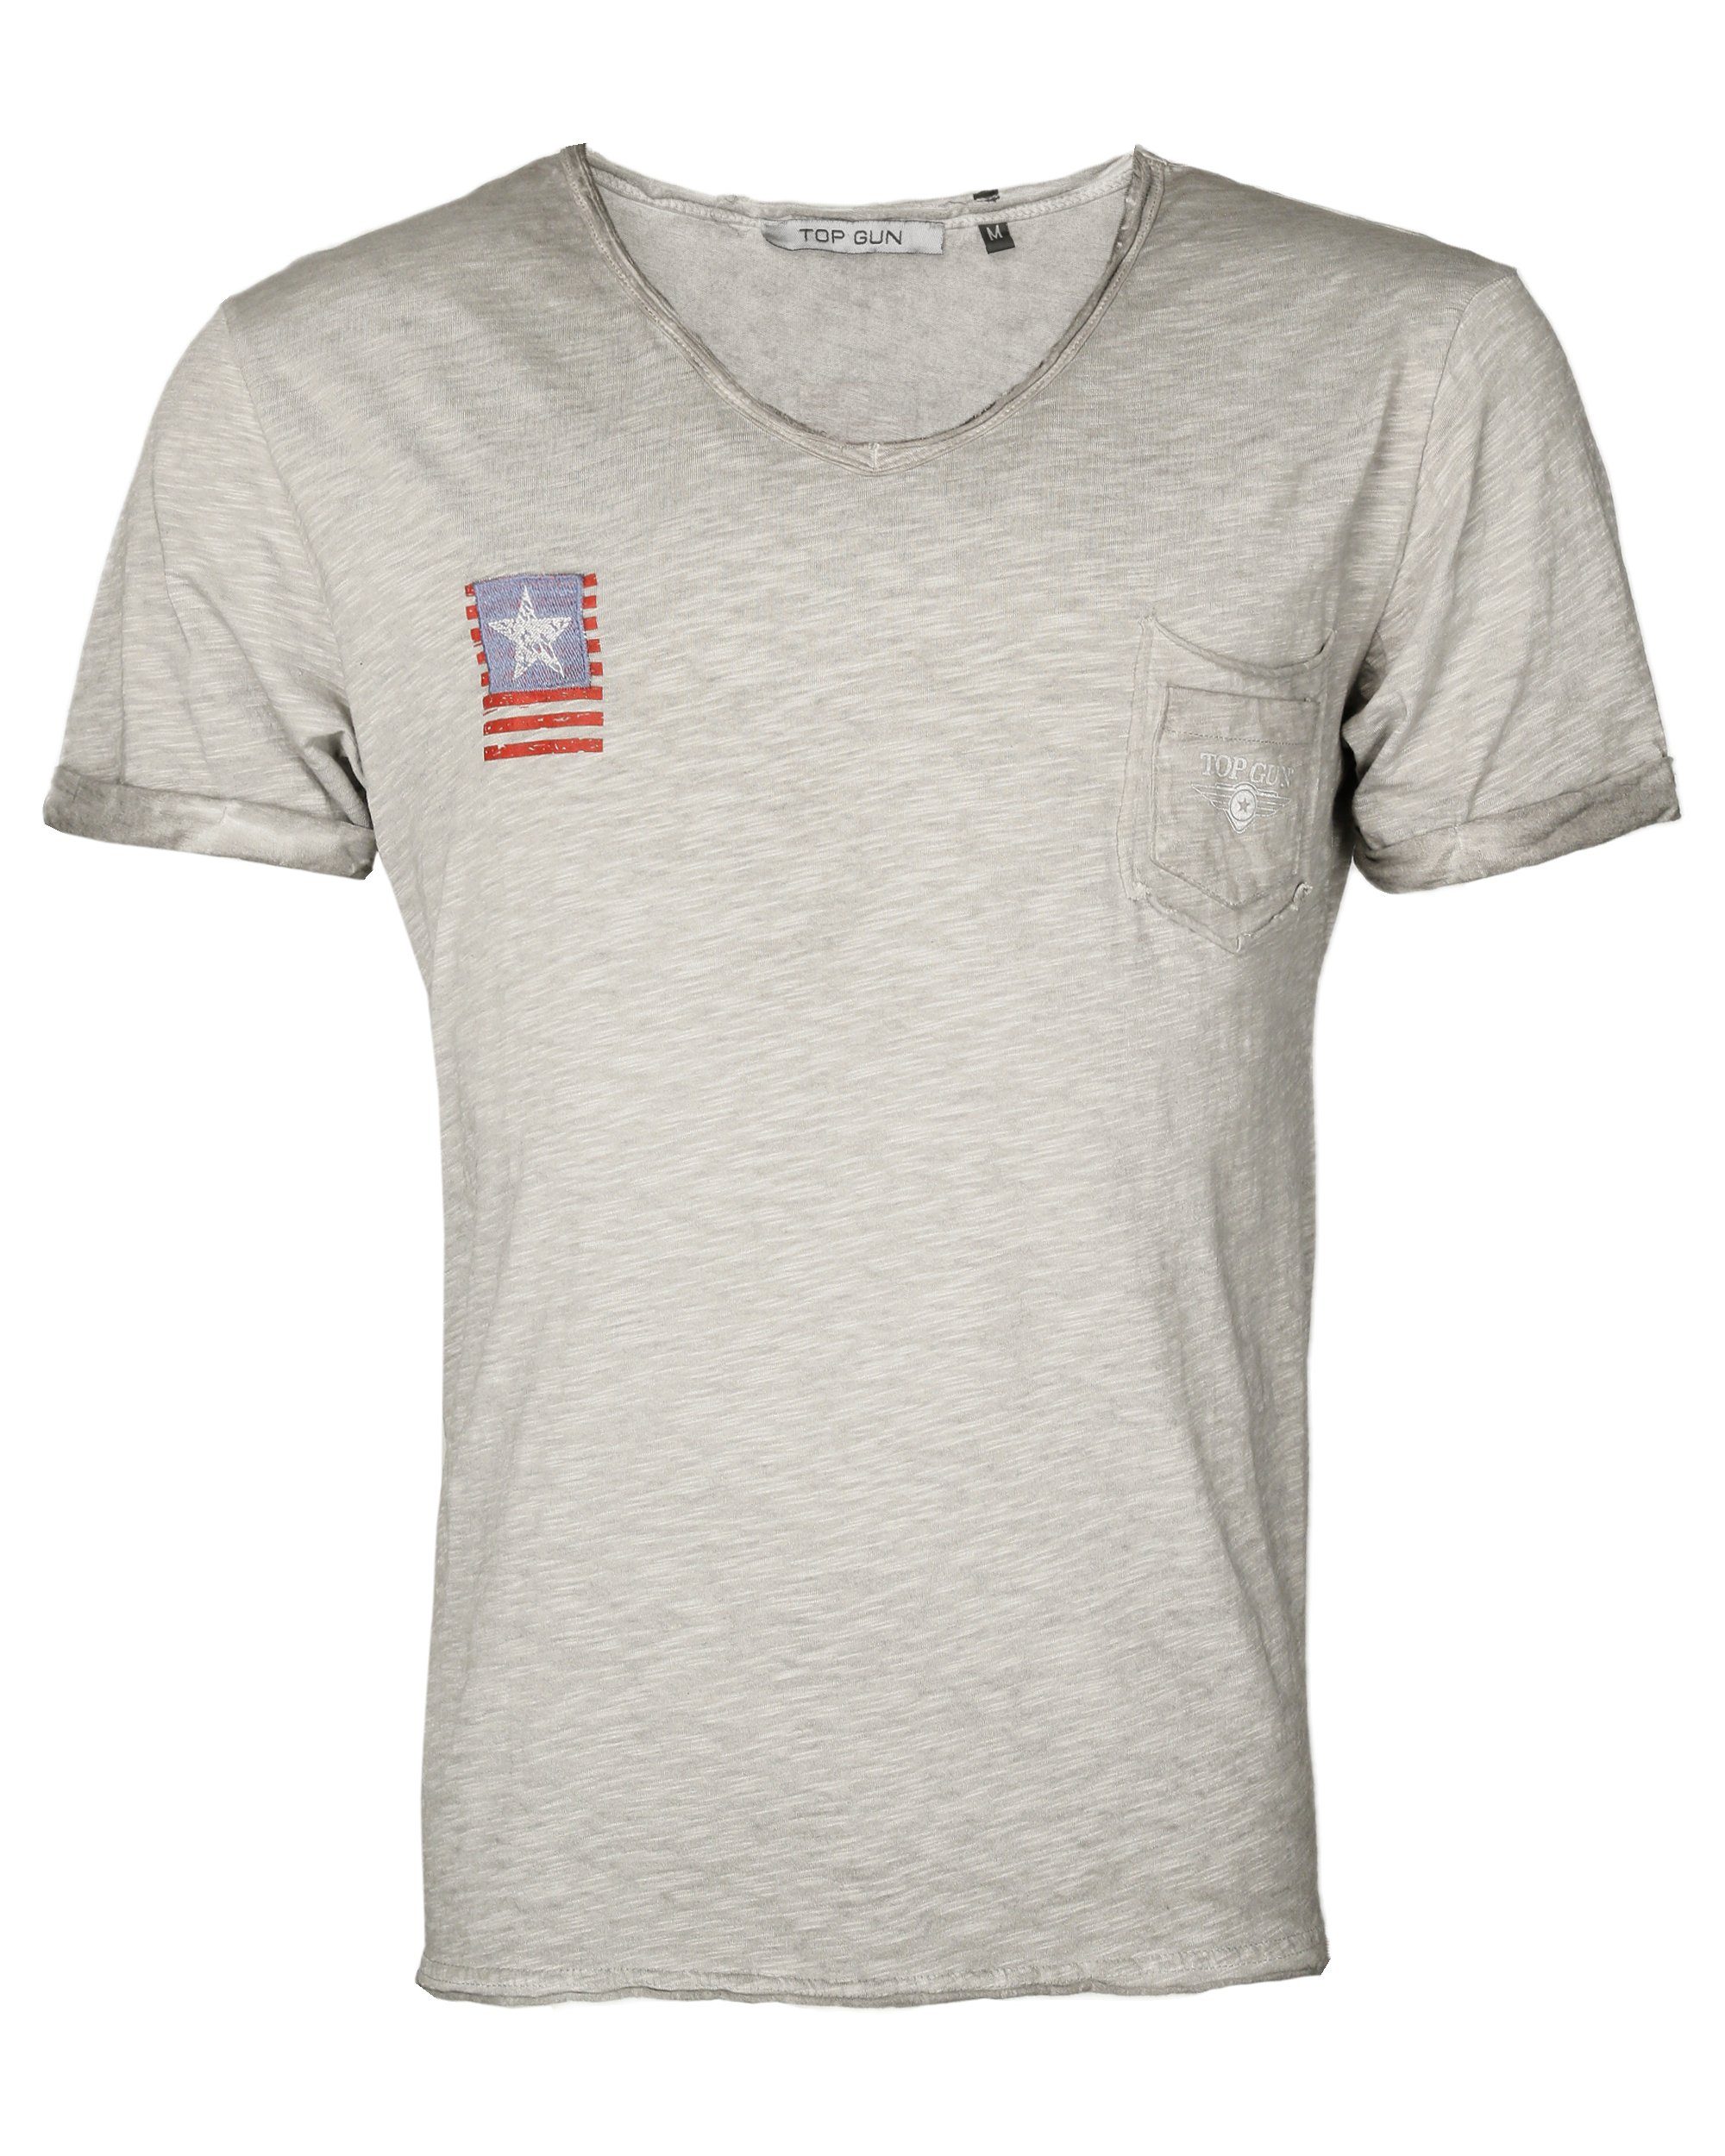 TOP GUN T-Shirt TG20193157 anthracite | T-Shirts